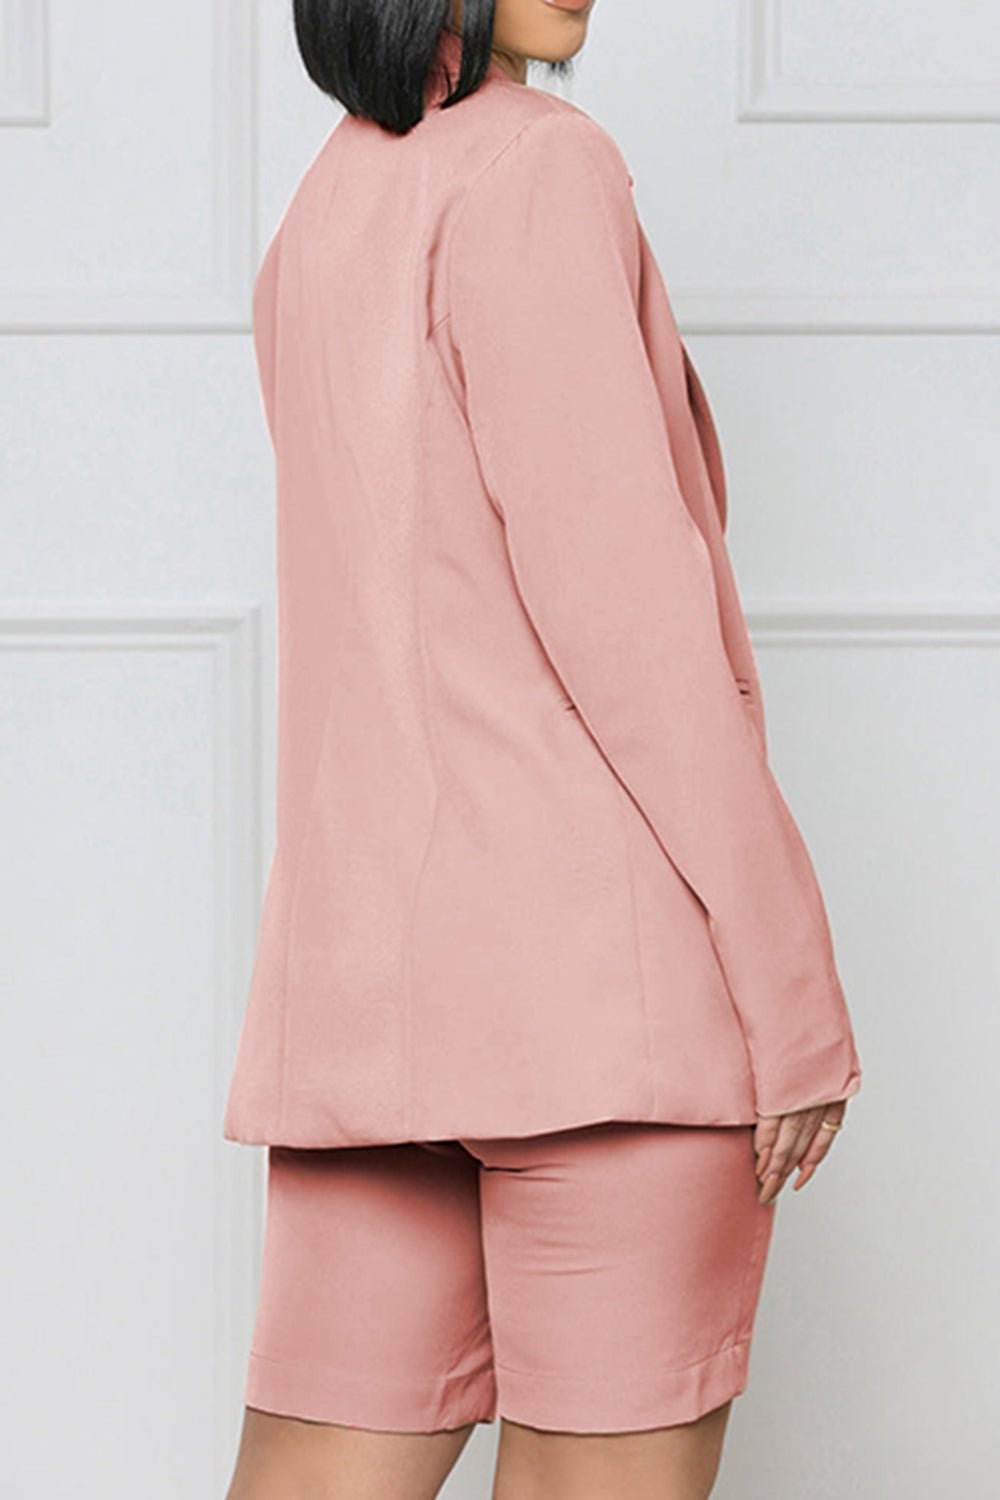 Long Sleeve Blazer and Shorts Set | Sugarz Chique Boutique